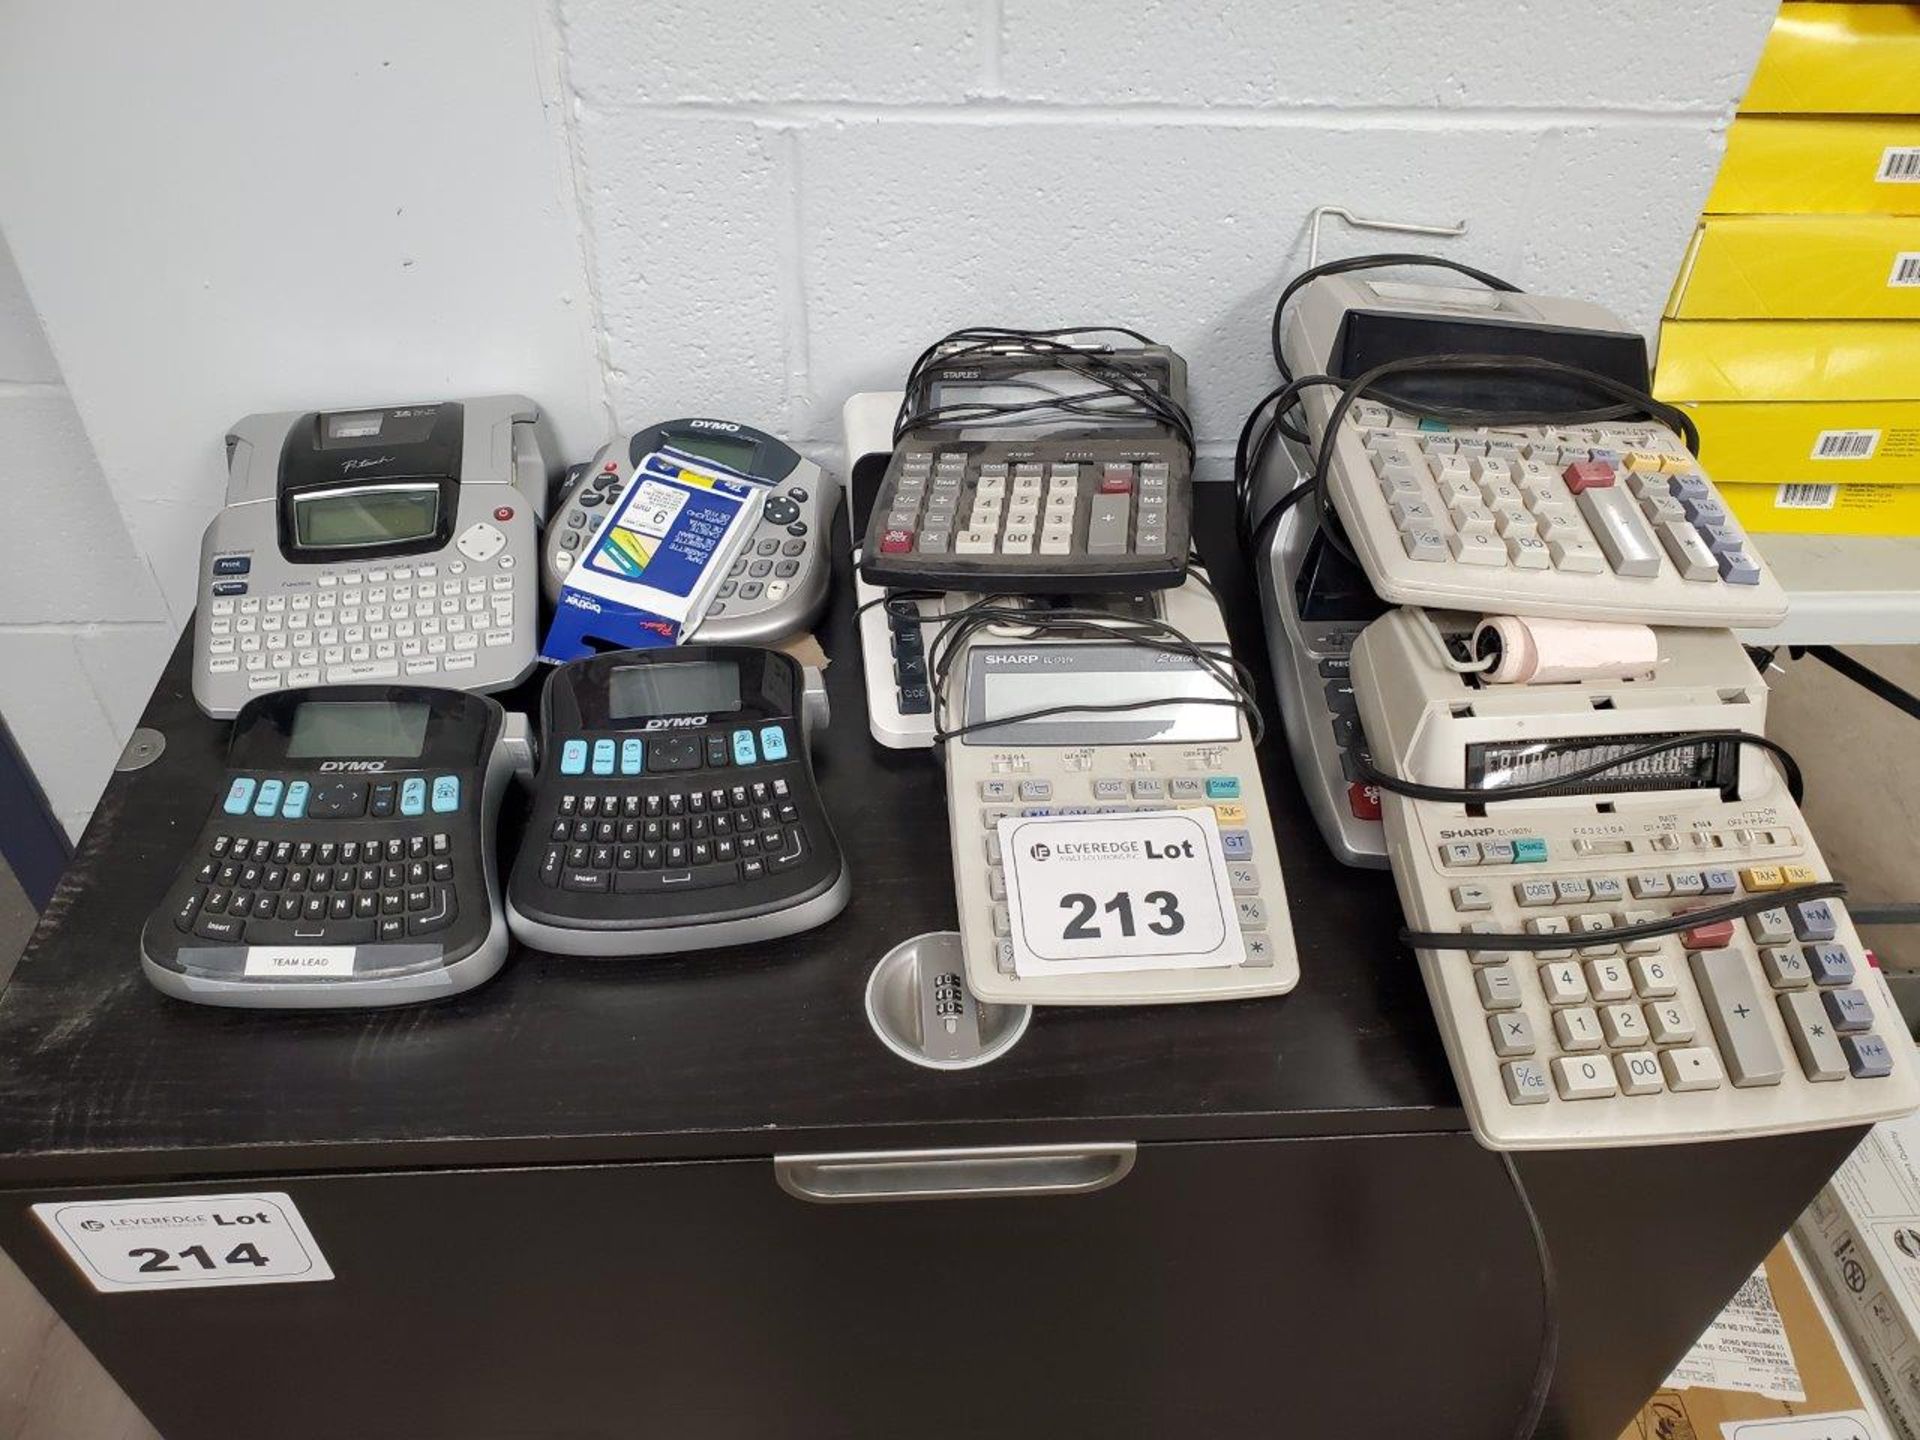 Lot of Label Printers and Calculators